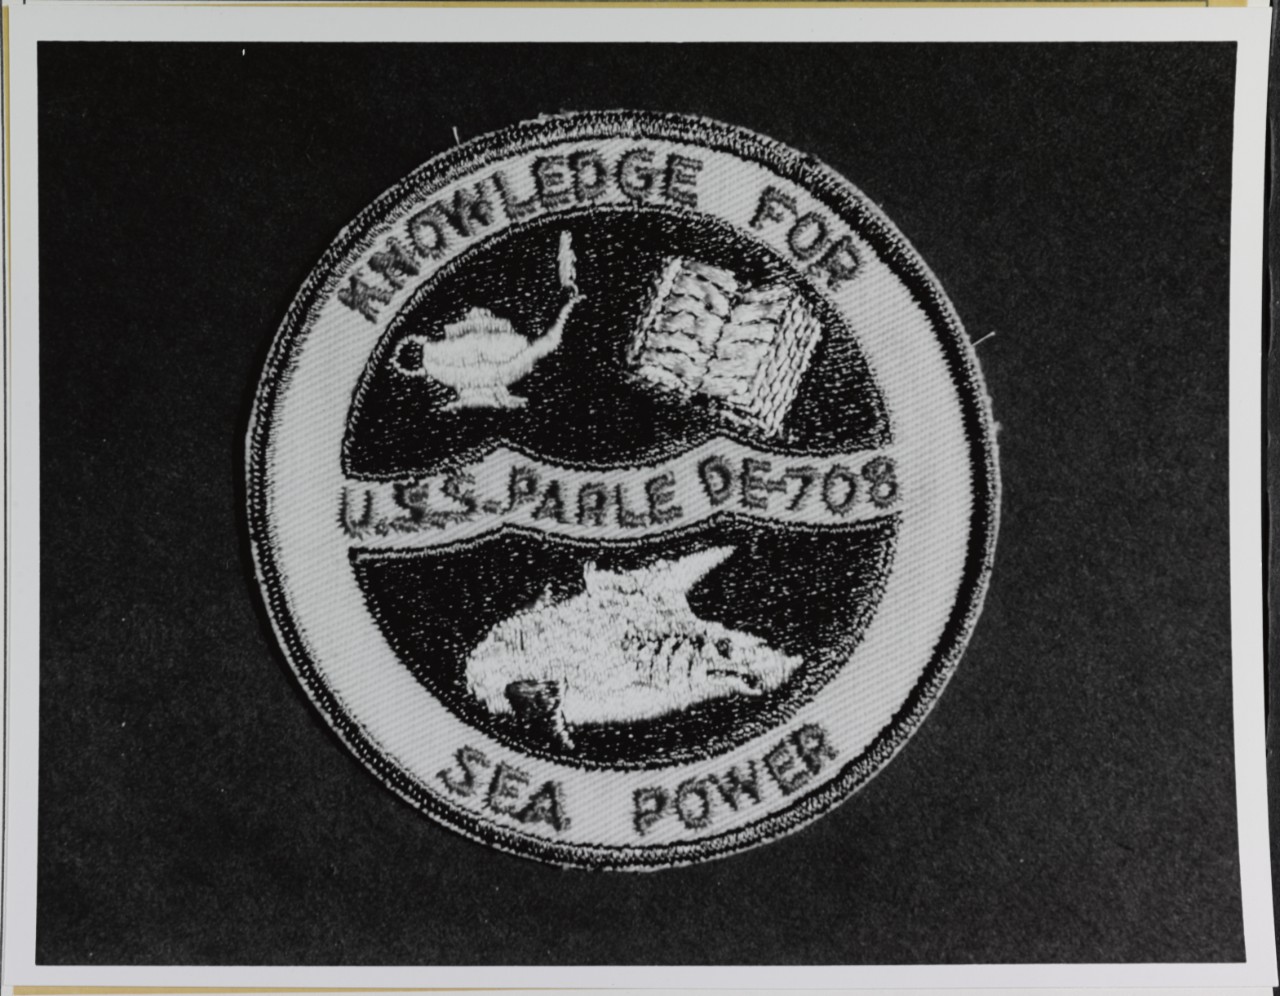 Insignia: USS PARLE (DE-708)